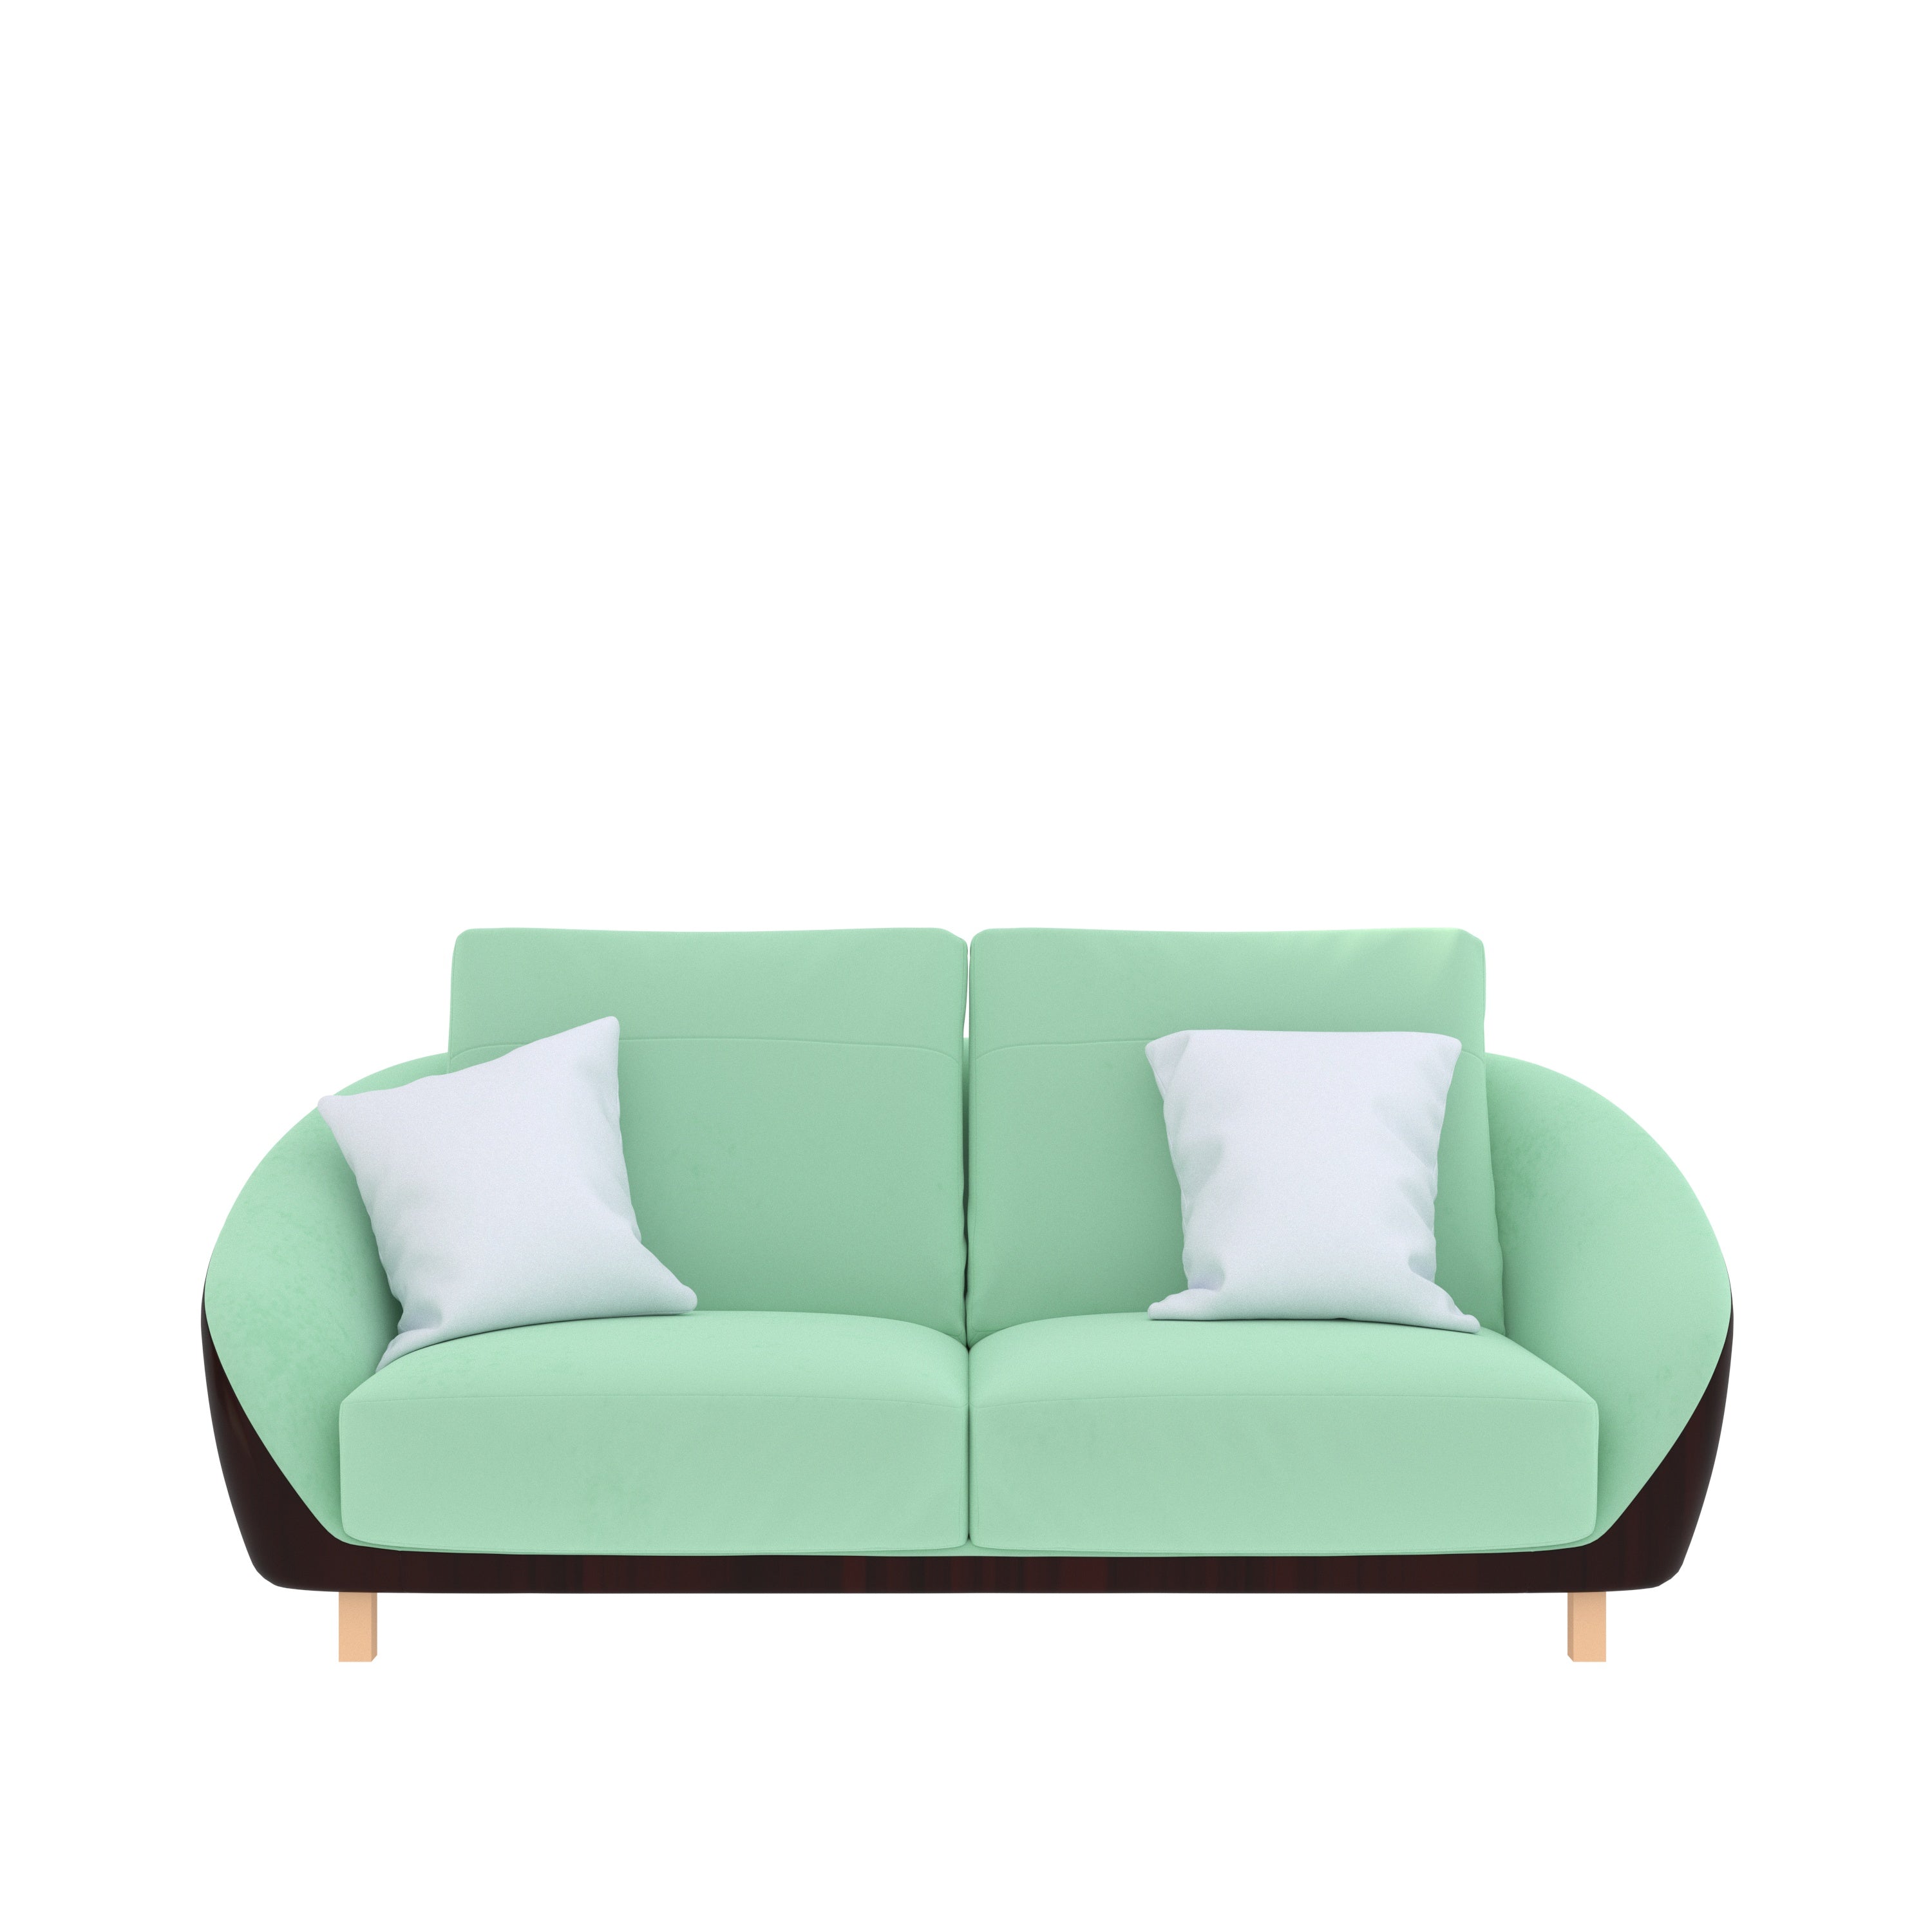 Emeraid Royal Green Smooth Finish Wooden 2 Seater Sofa Sofa